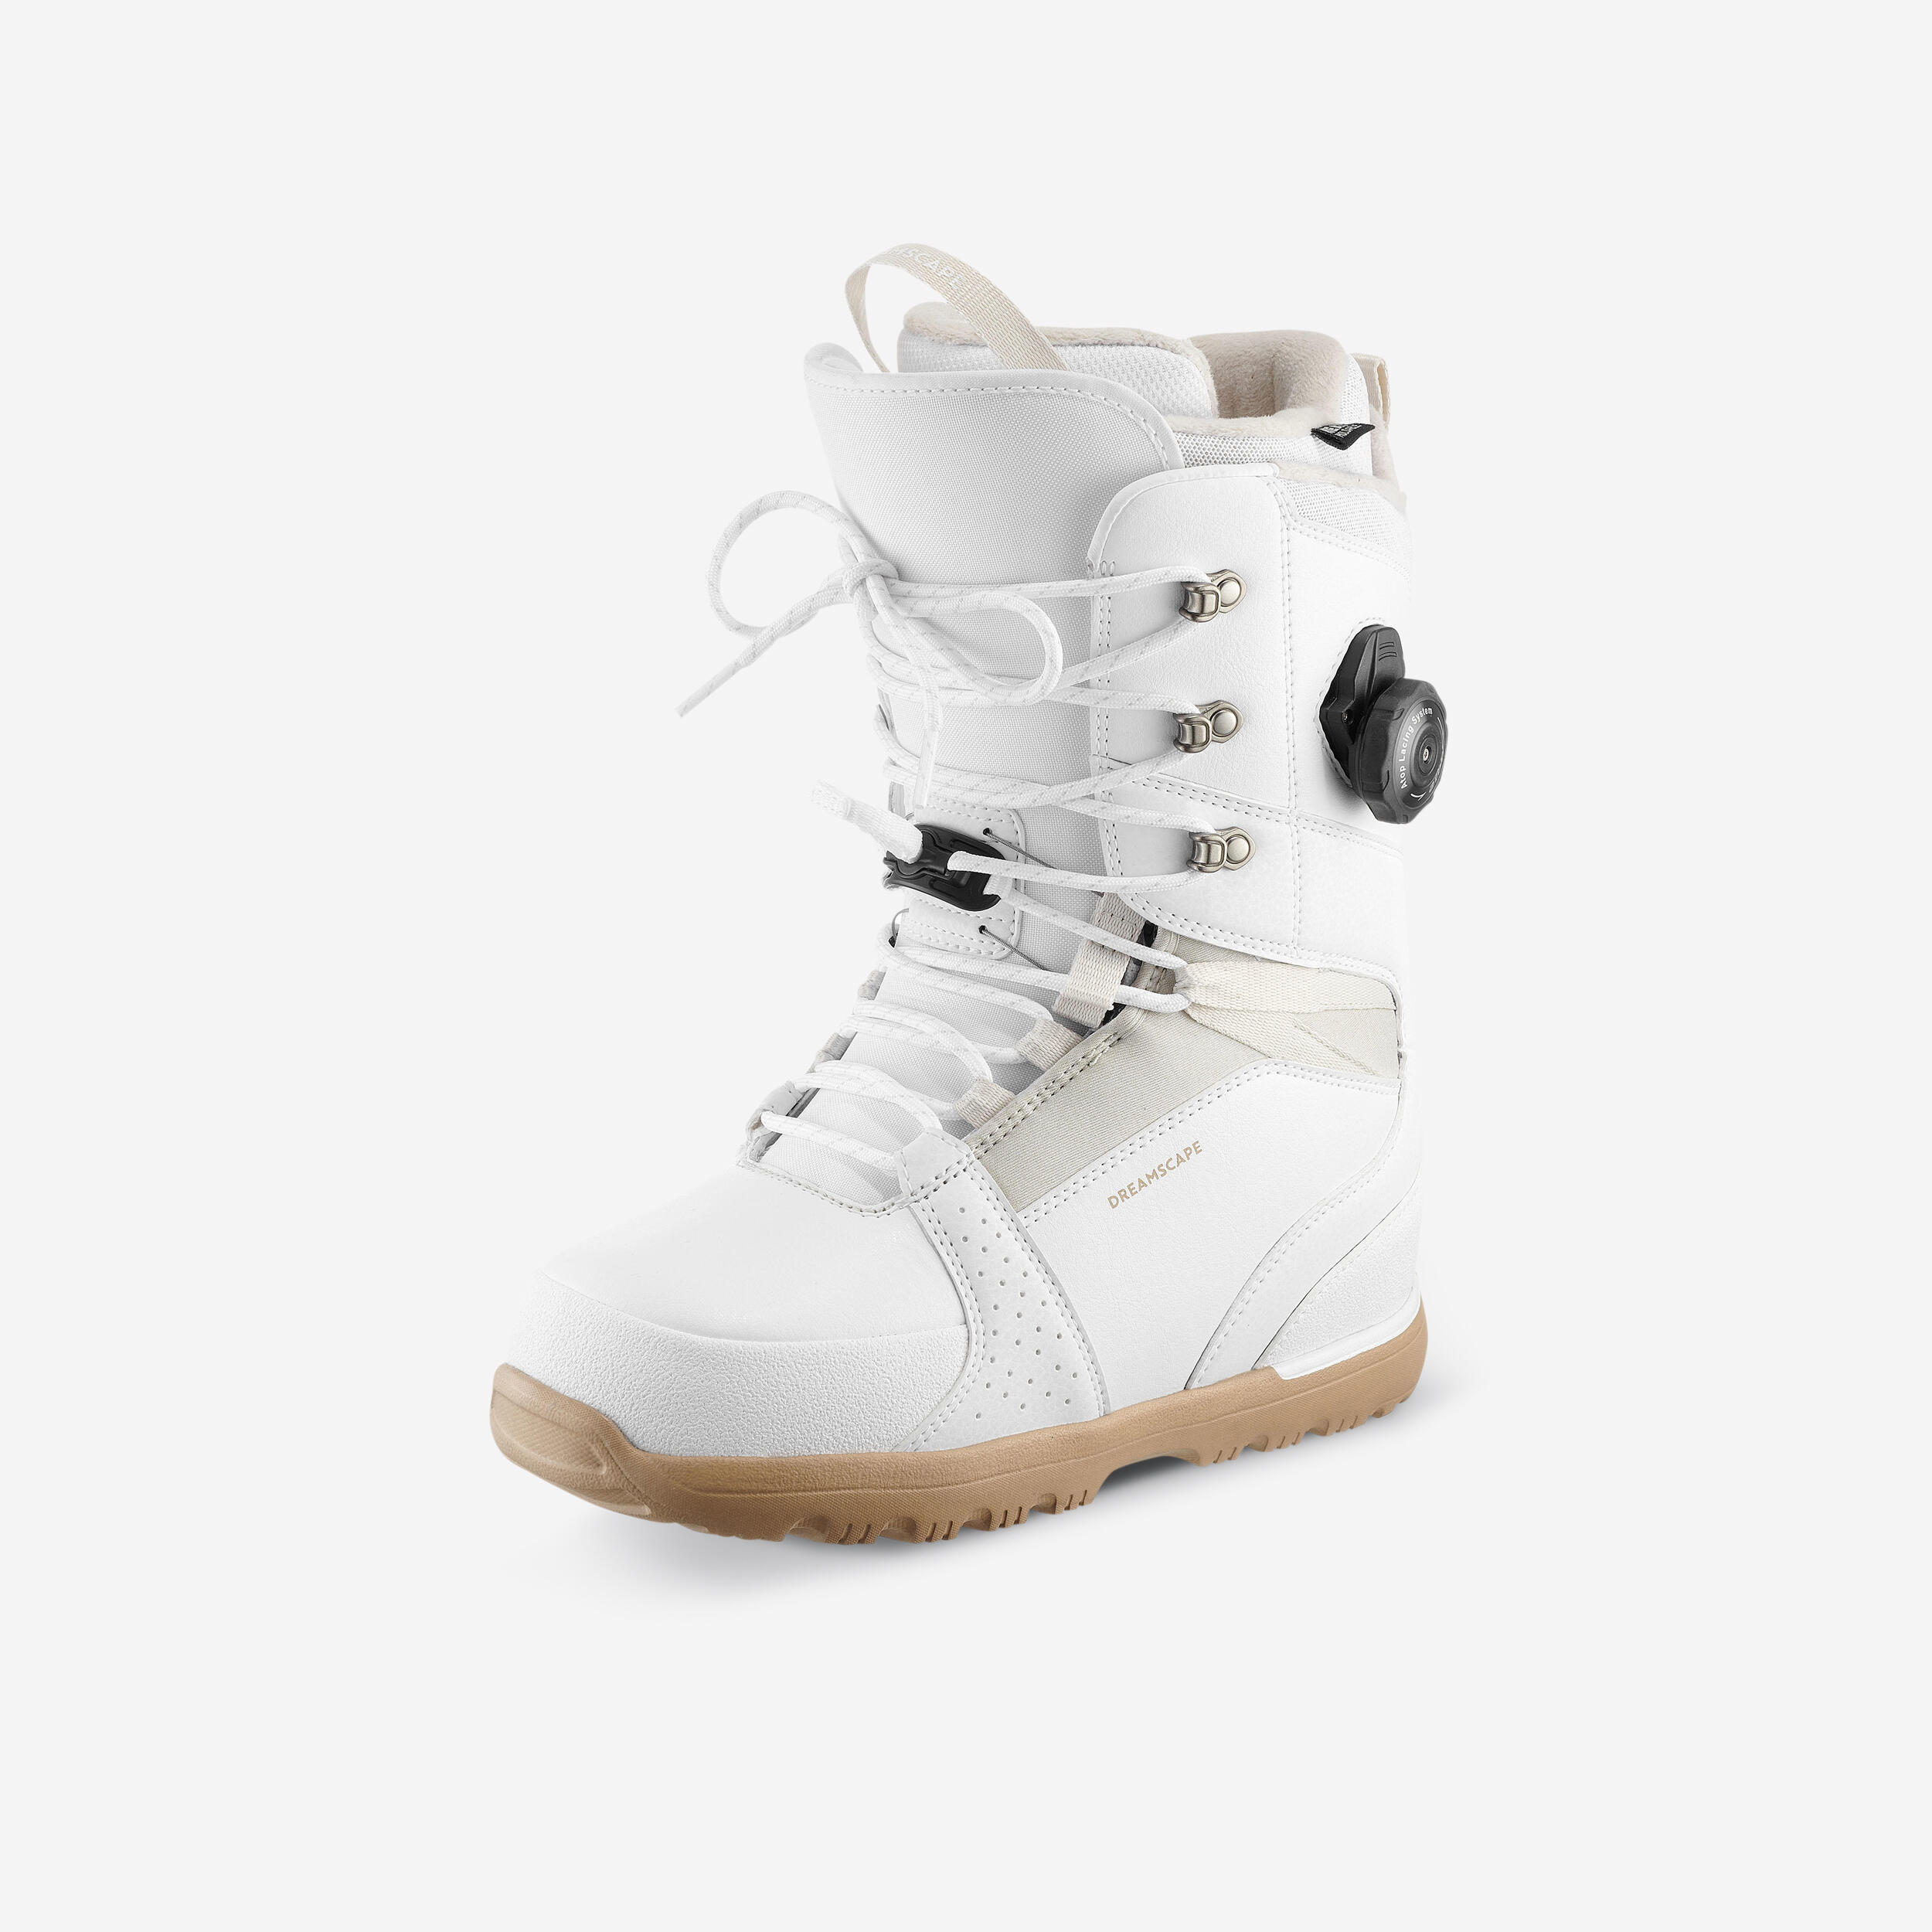 Women's hybrid snowboard boots, medium flex - Endzone white 1/14